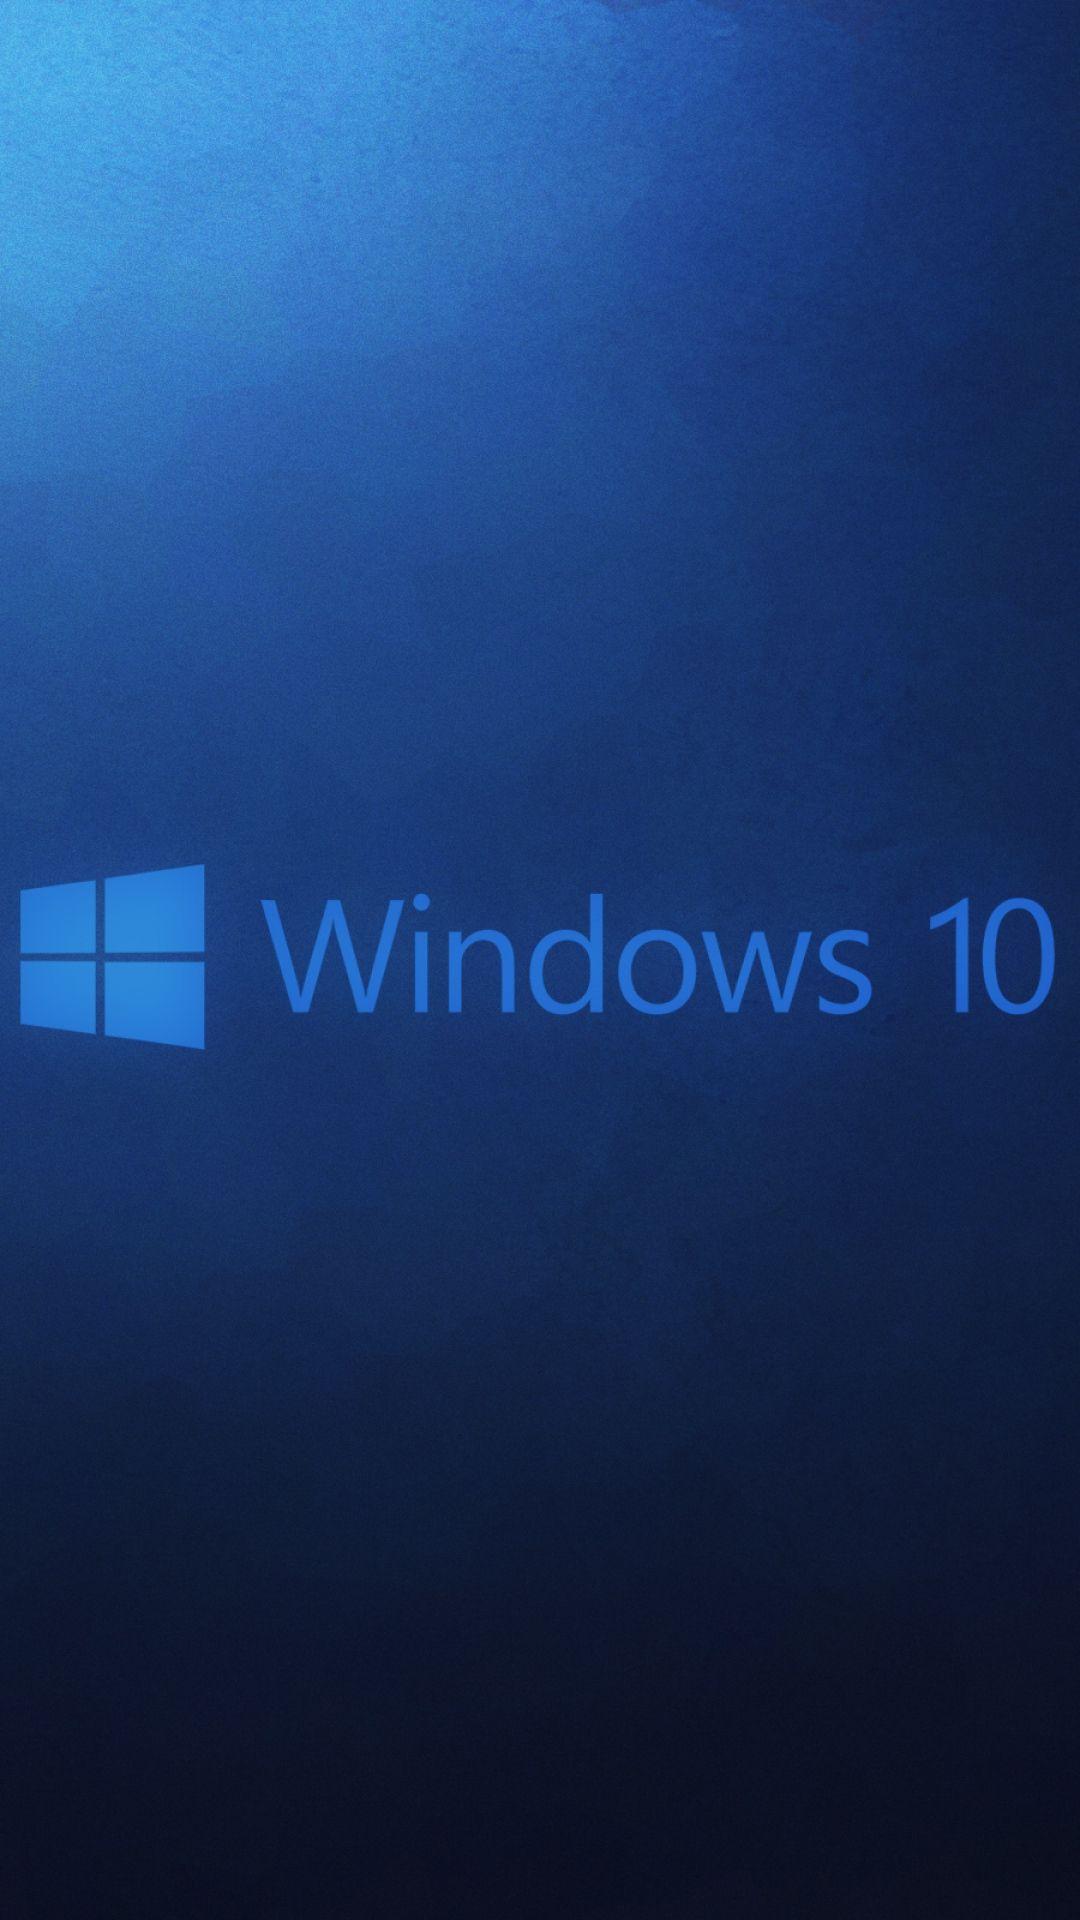 Windows 1.0 Wallpapers - Top Free